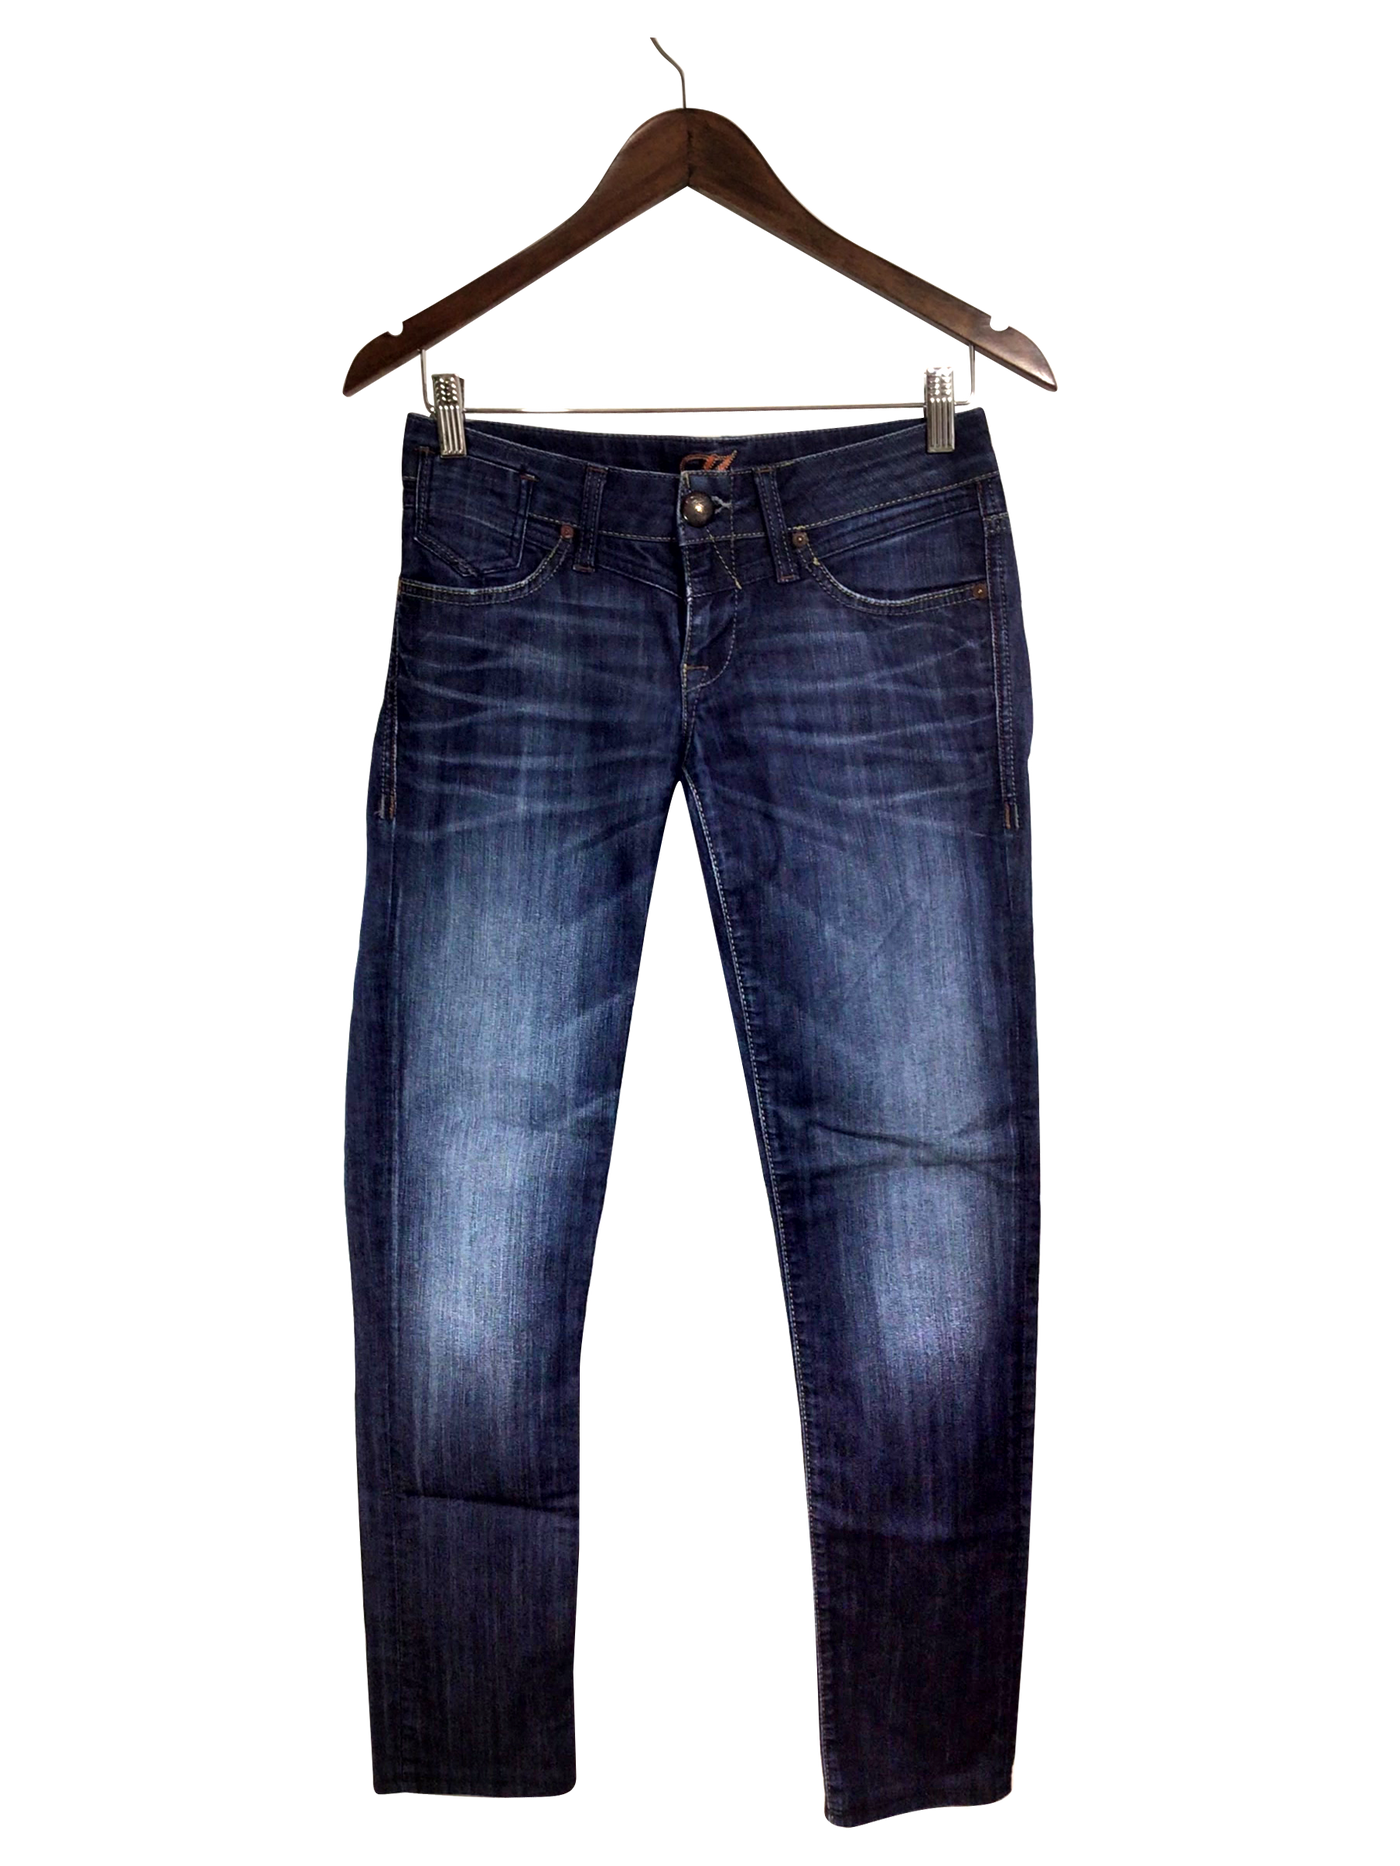 MAXI Straight-legged Jeans Regular fit in Blue - Size 26x34 | 15 $ KOOP